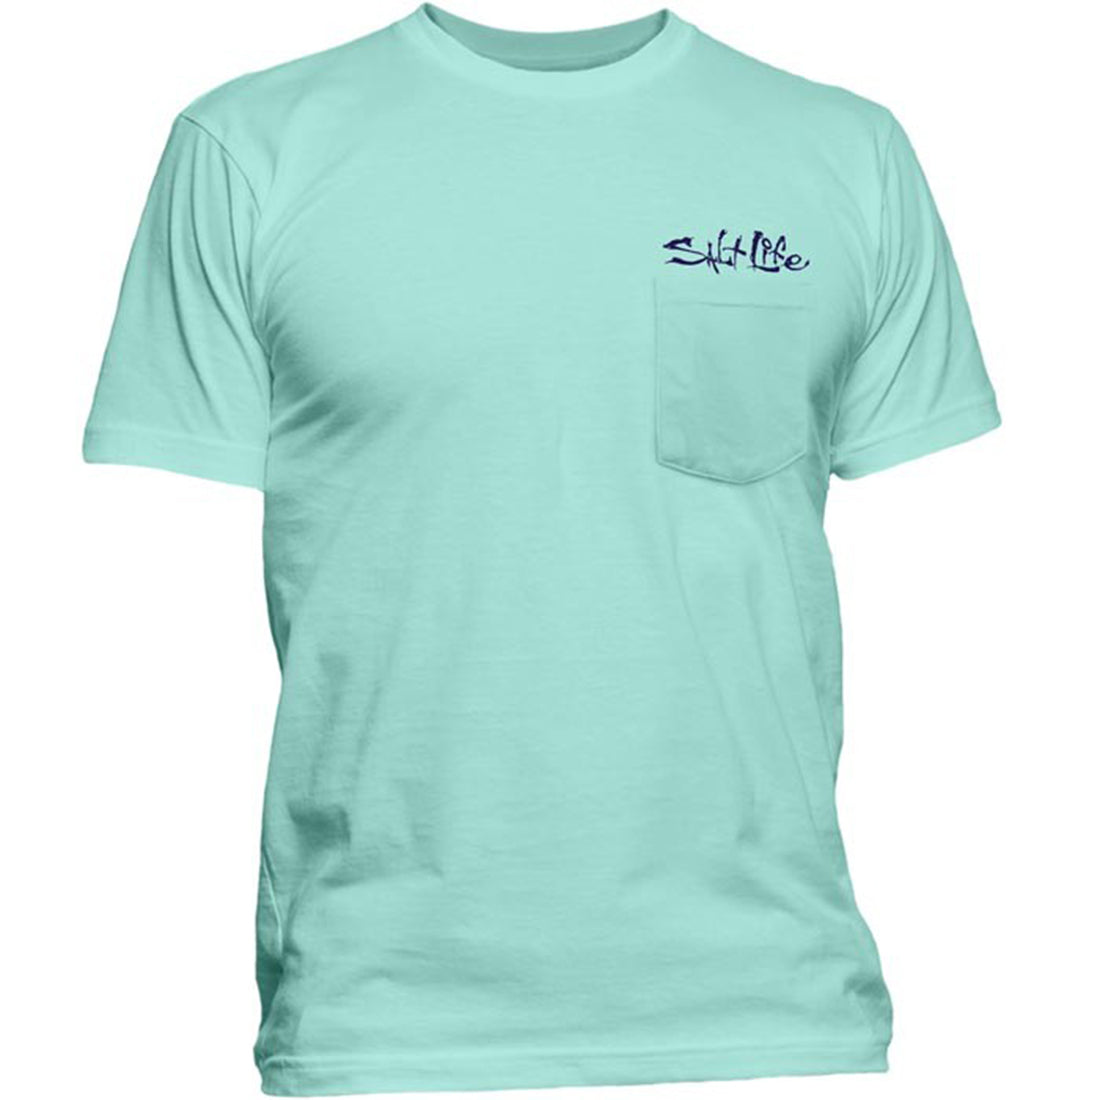 Salt Life Men's Billfish Tournament Pocket T-shirt